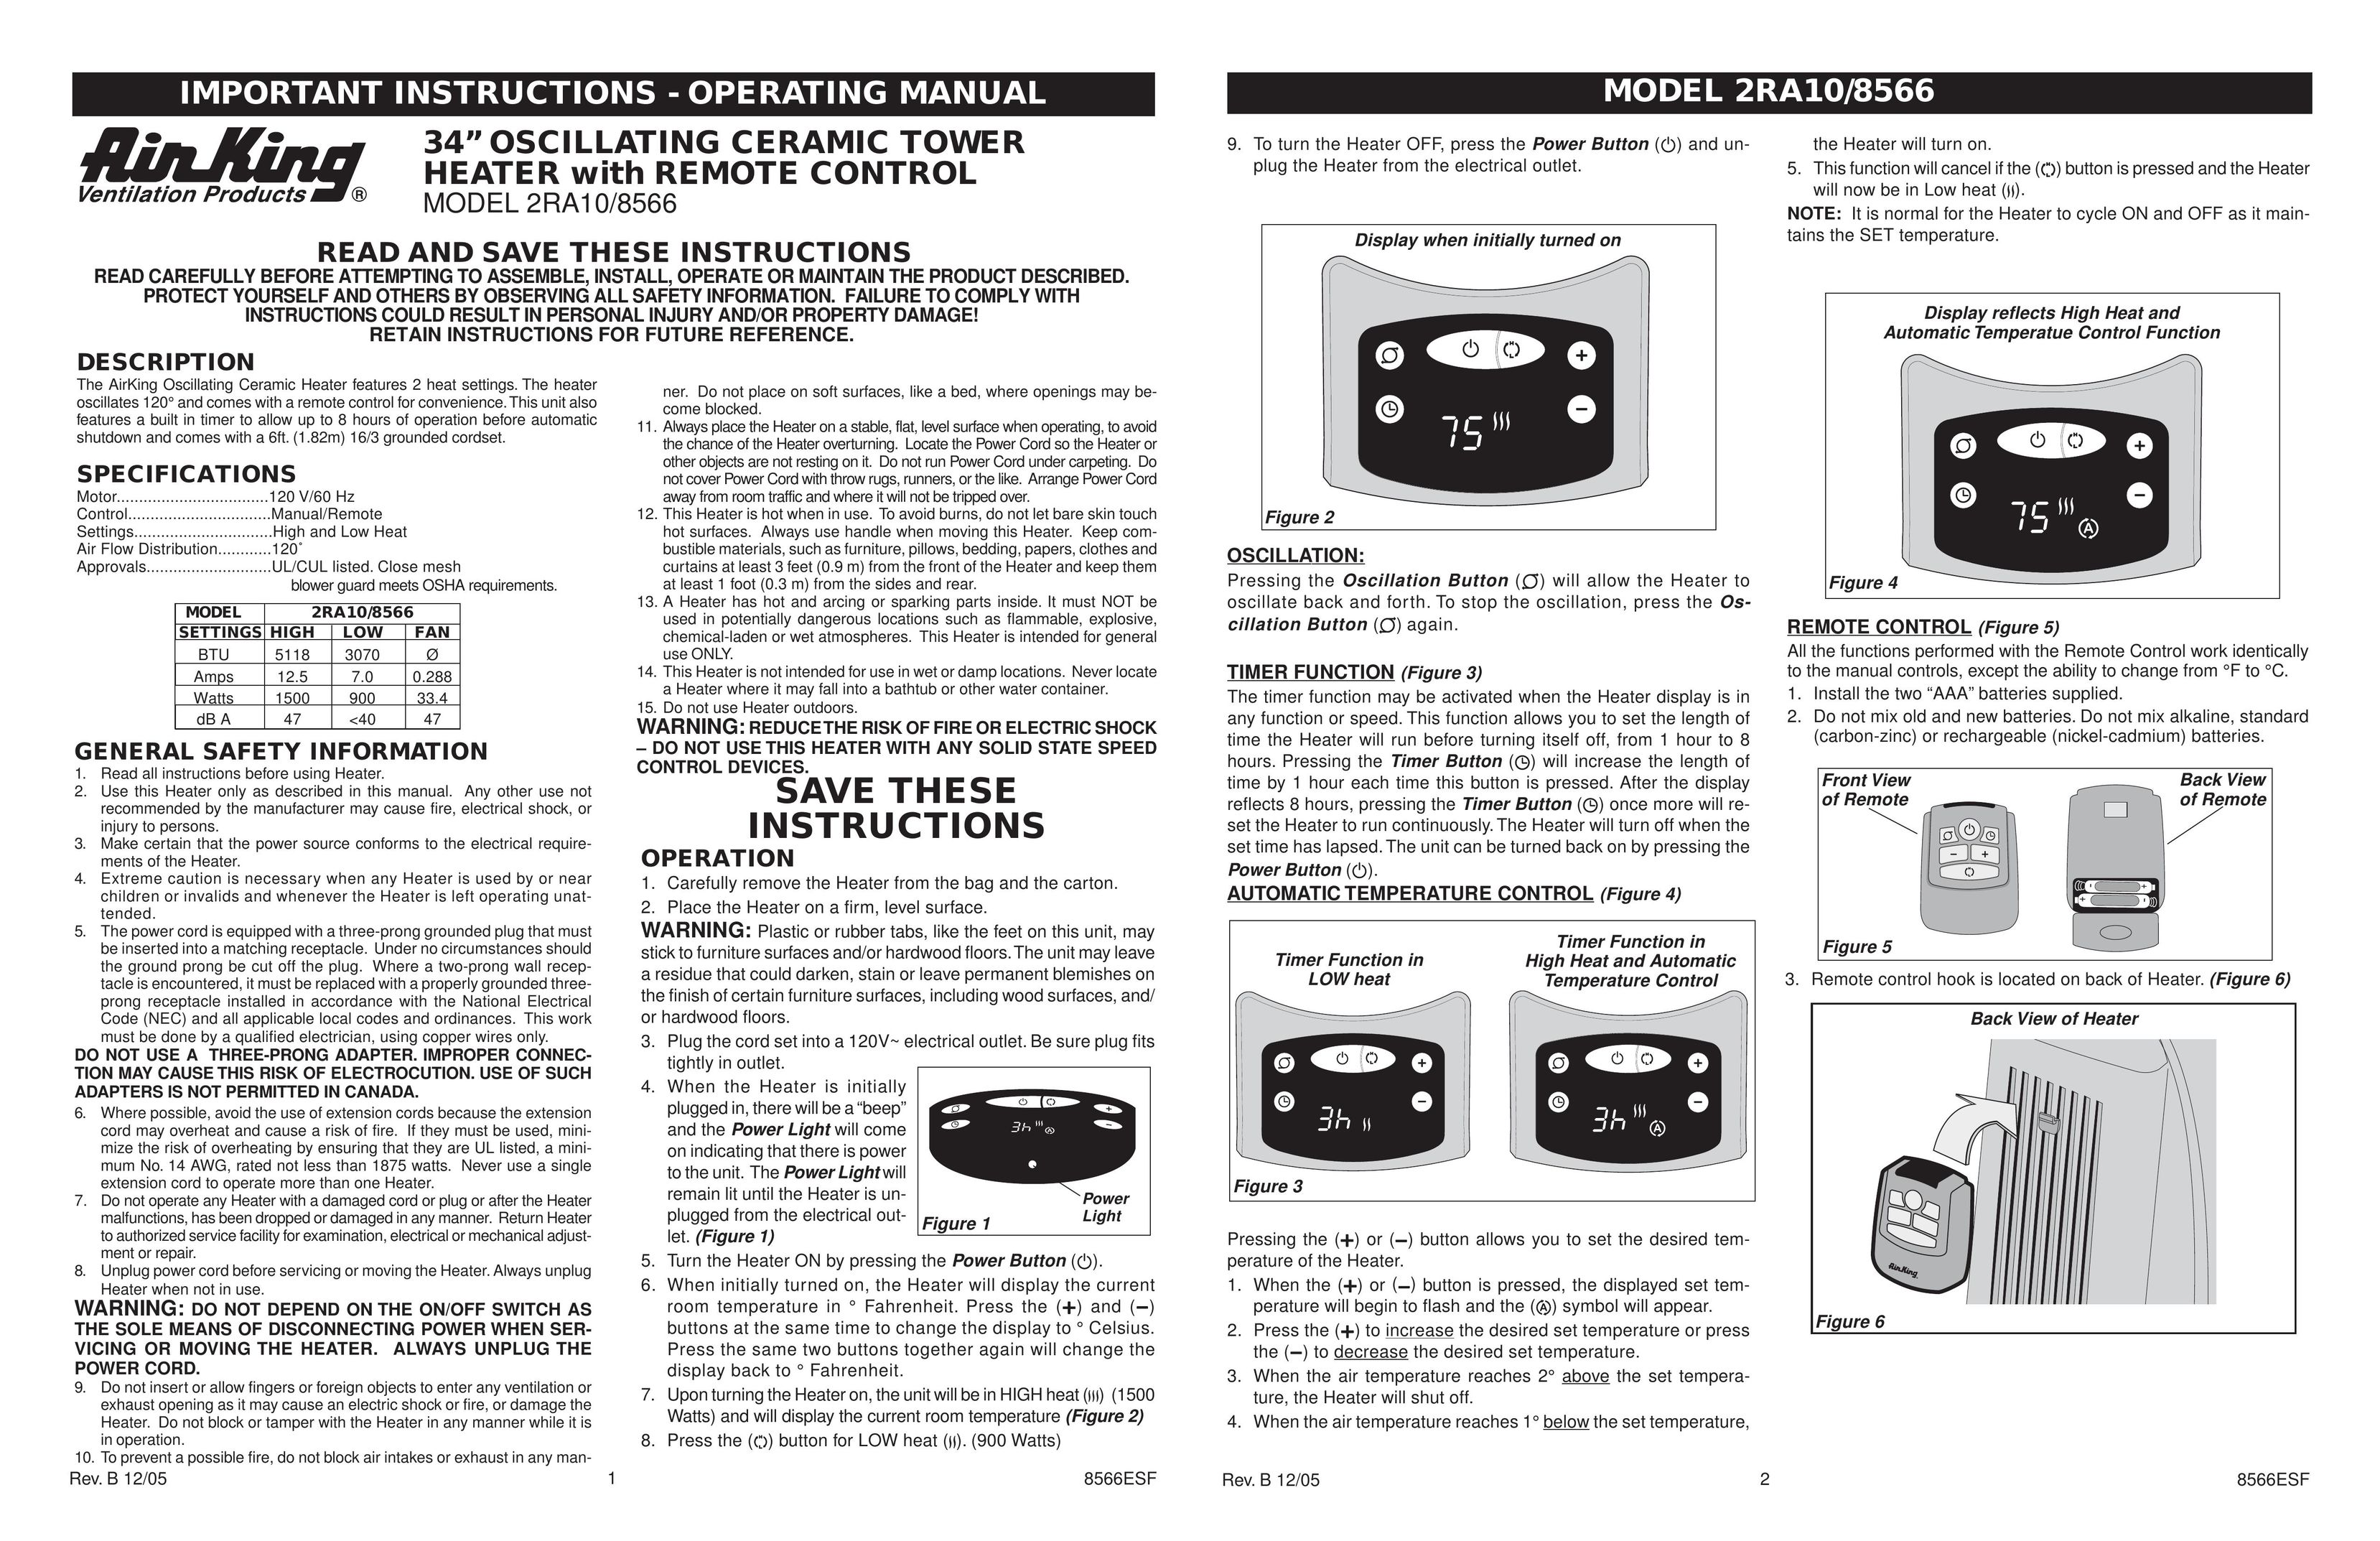 Air King 2RA10/8566 Air Conditioner User Manual